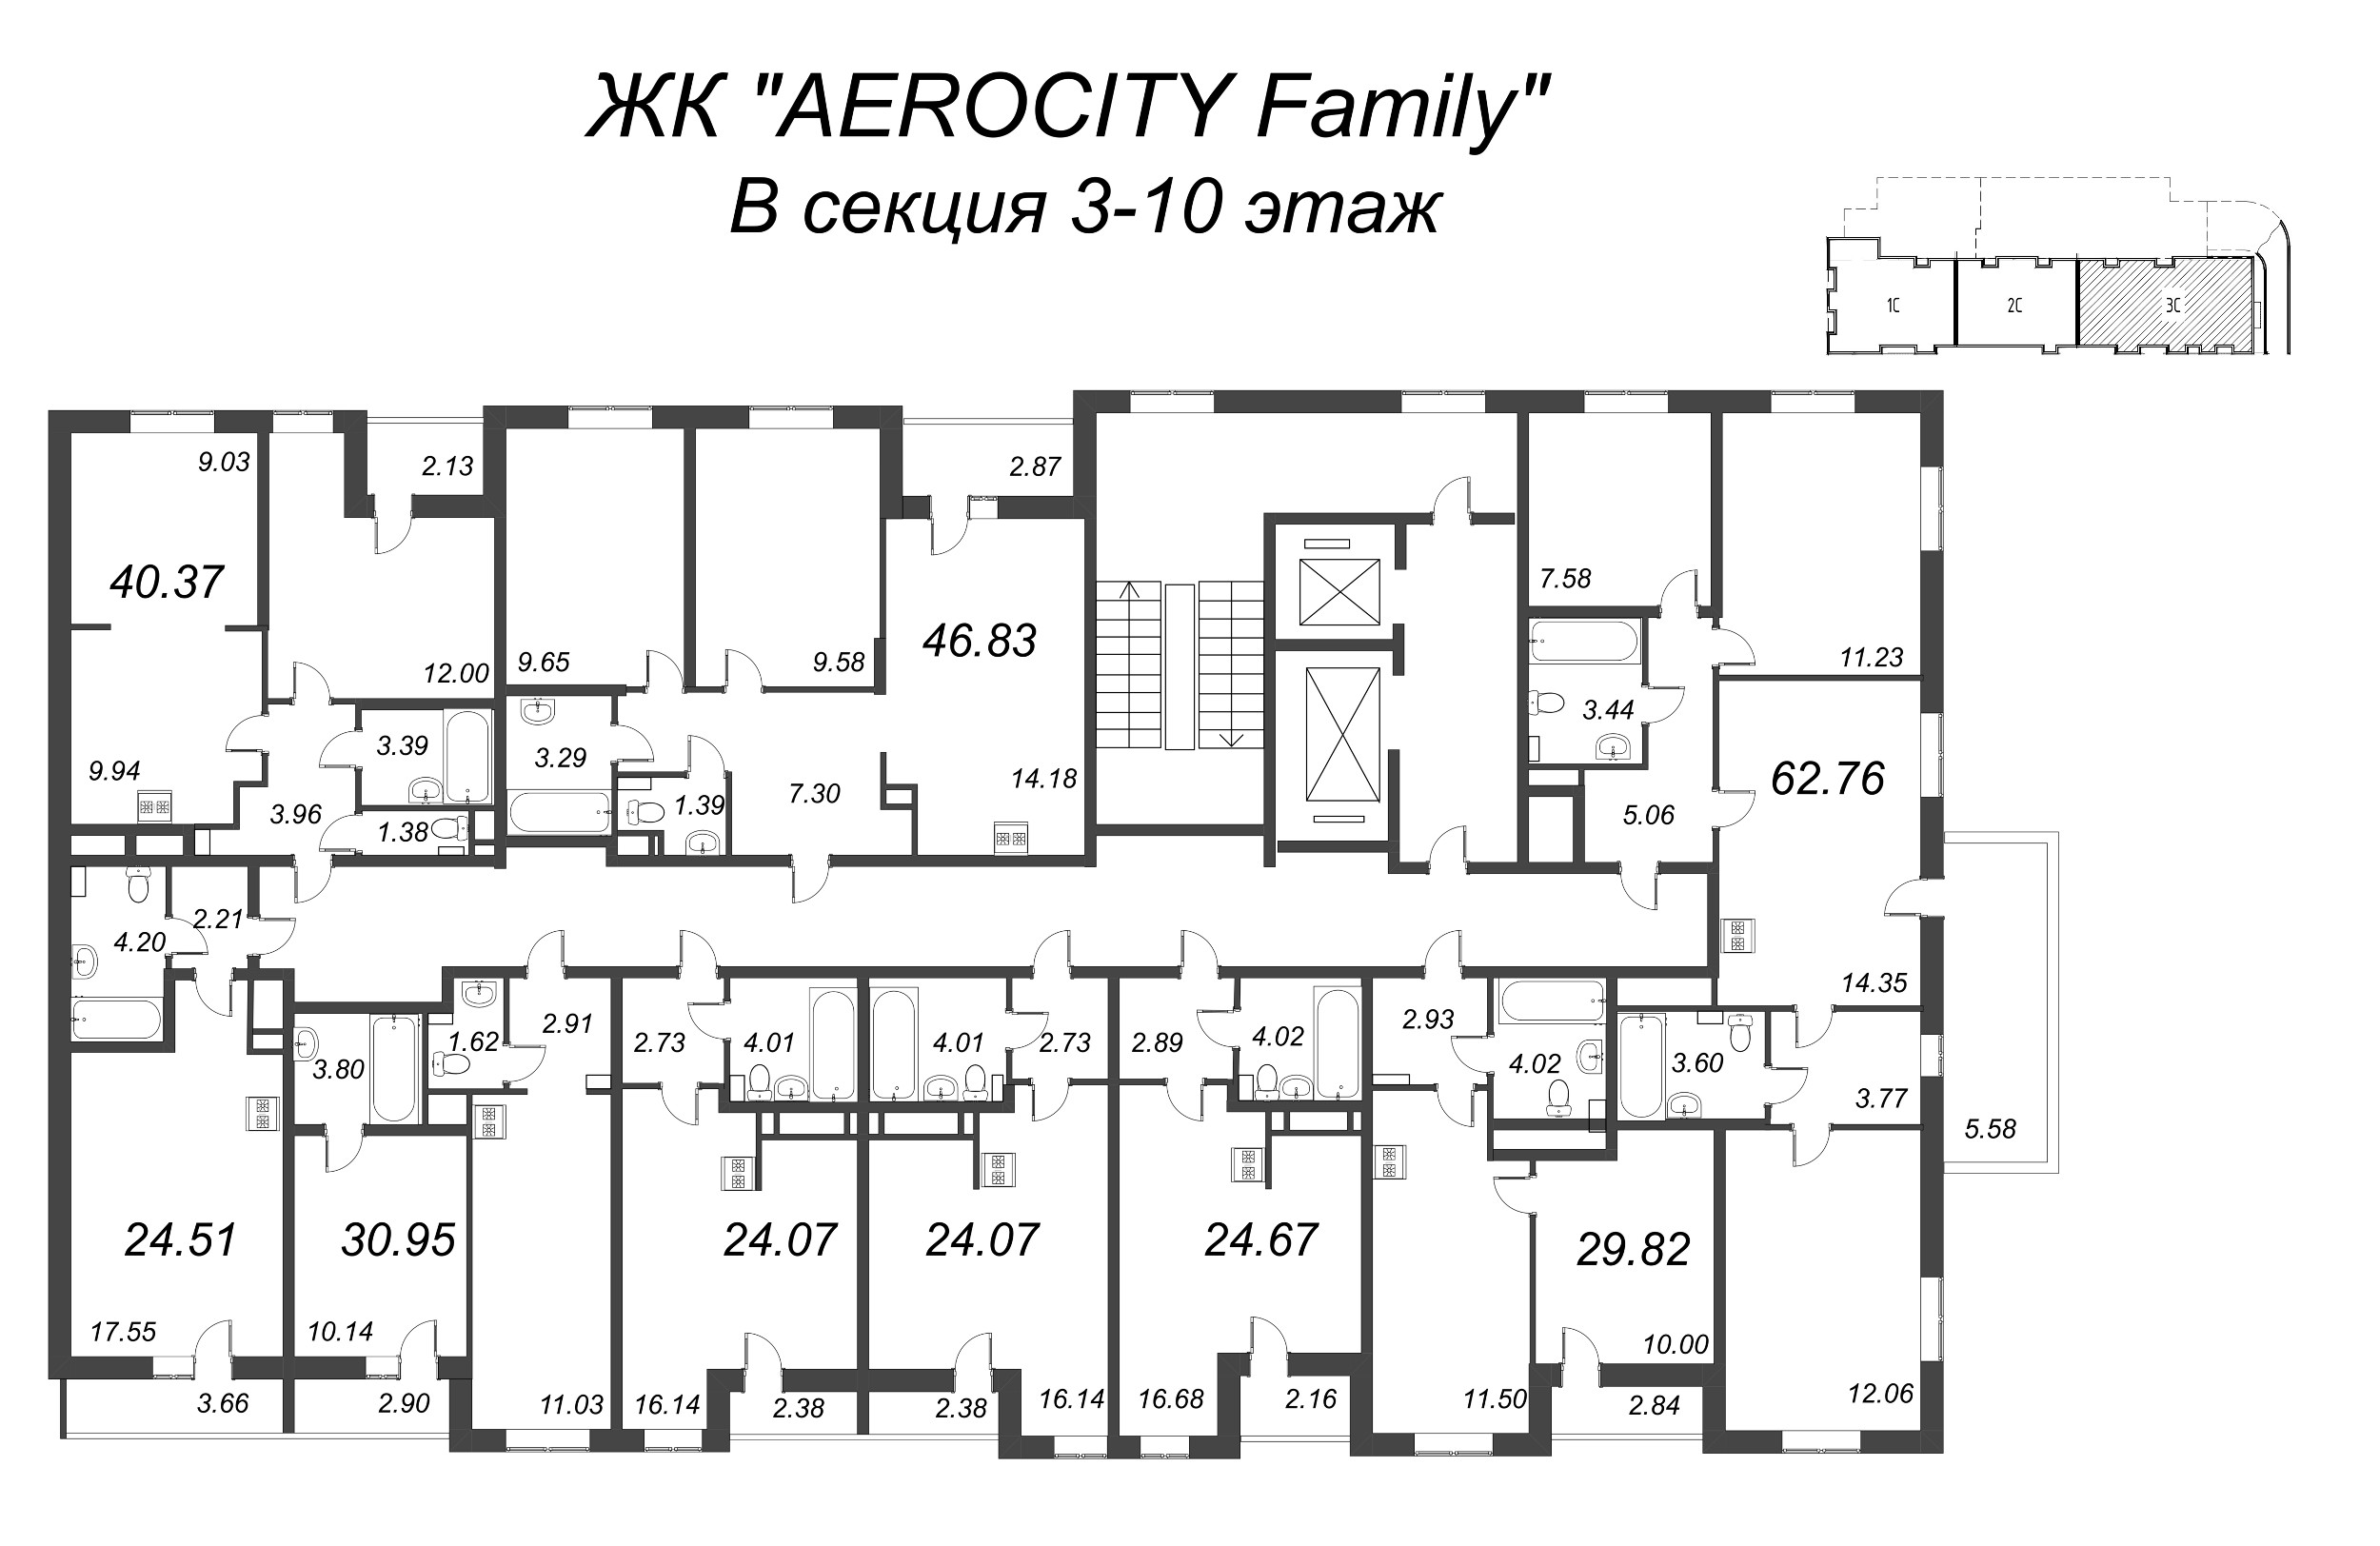 2-комнатная (Евро) квартира, 40.37 м² - планировка этажа